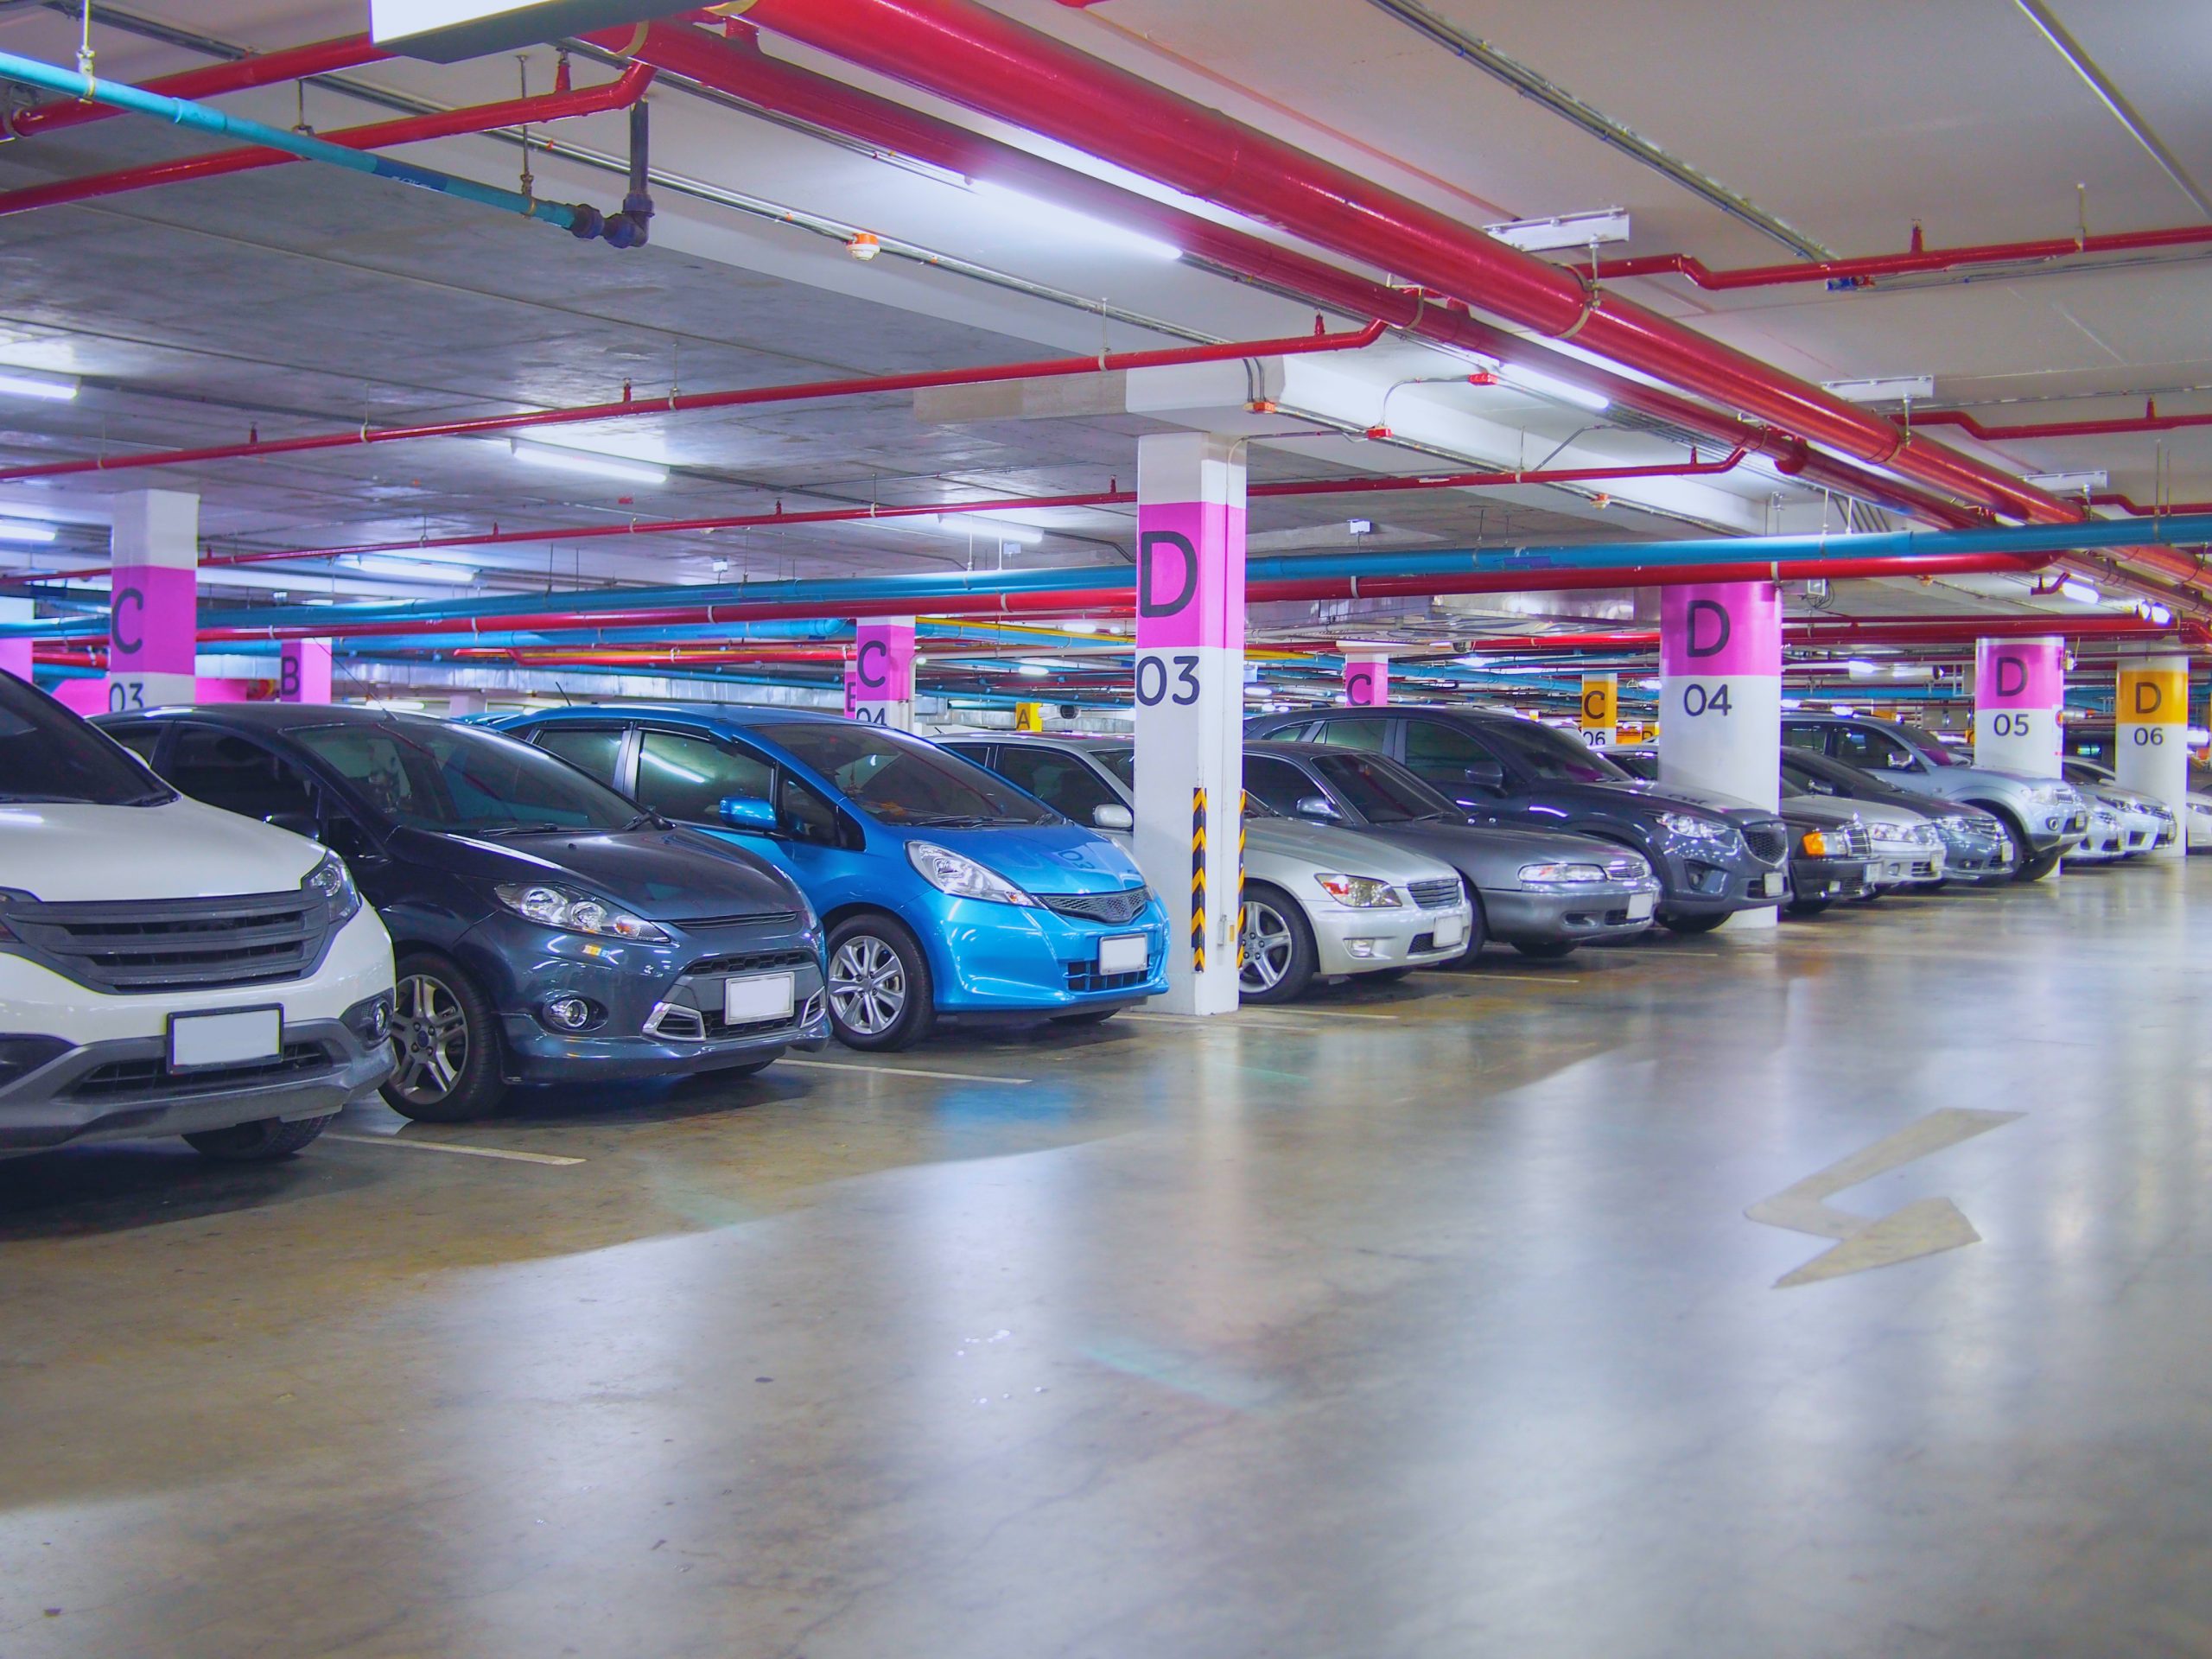 underground parking cars with Rhinofloor coating system floor